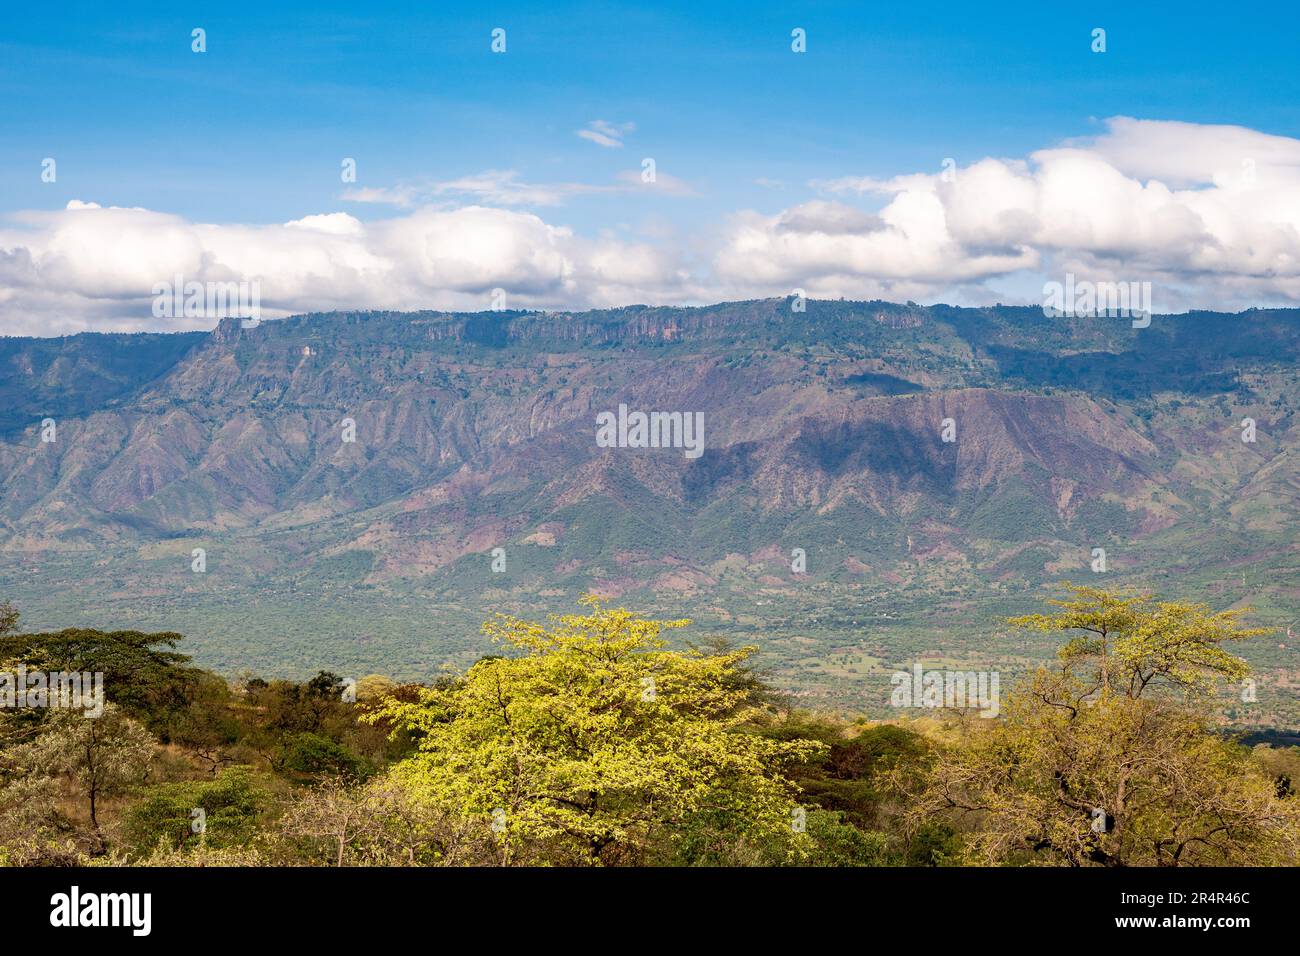 Felswände am Rand des ostafrikanischen Rift Valley. Kenia, Afrika. Stockfoto